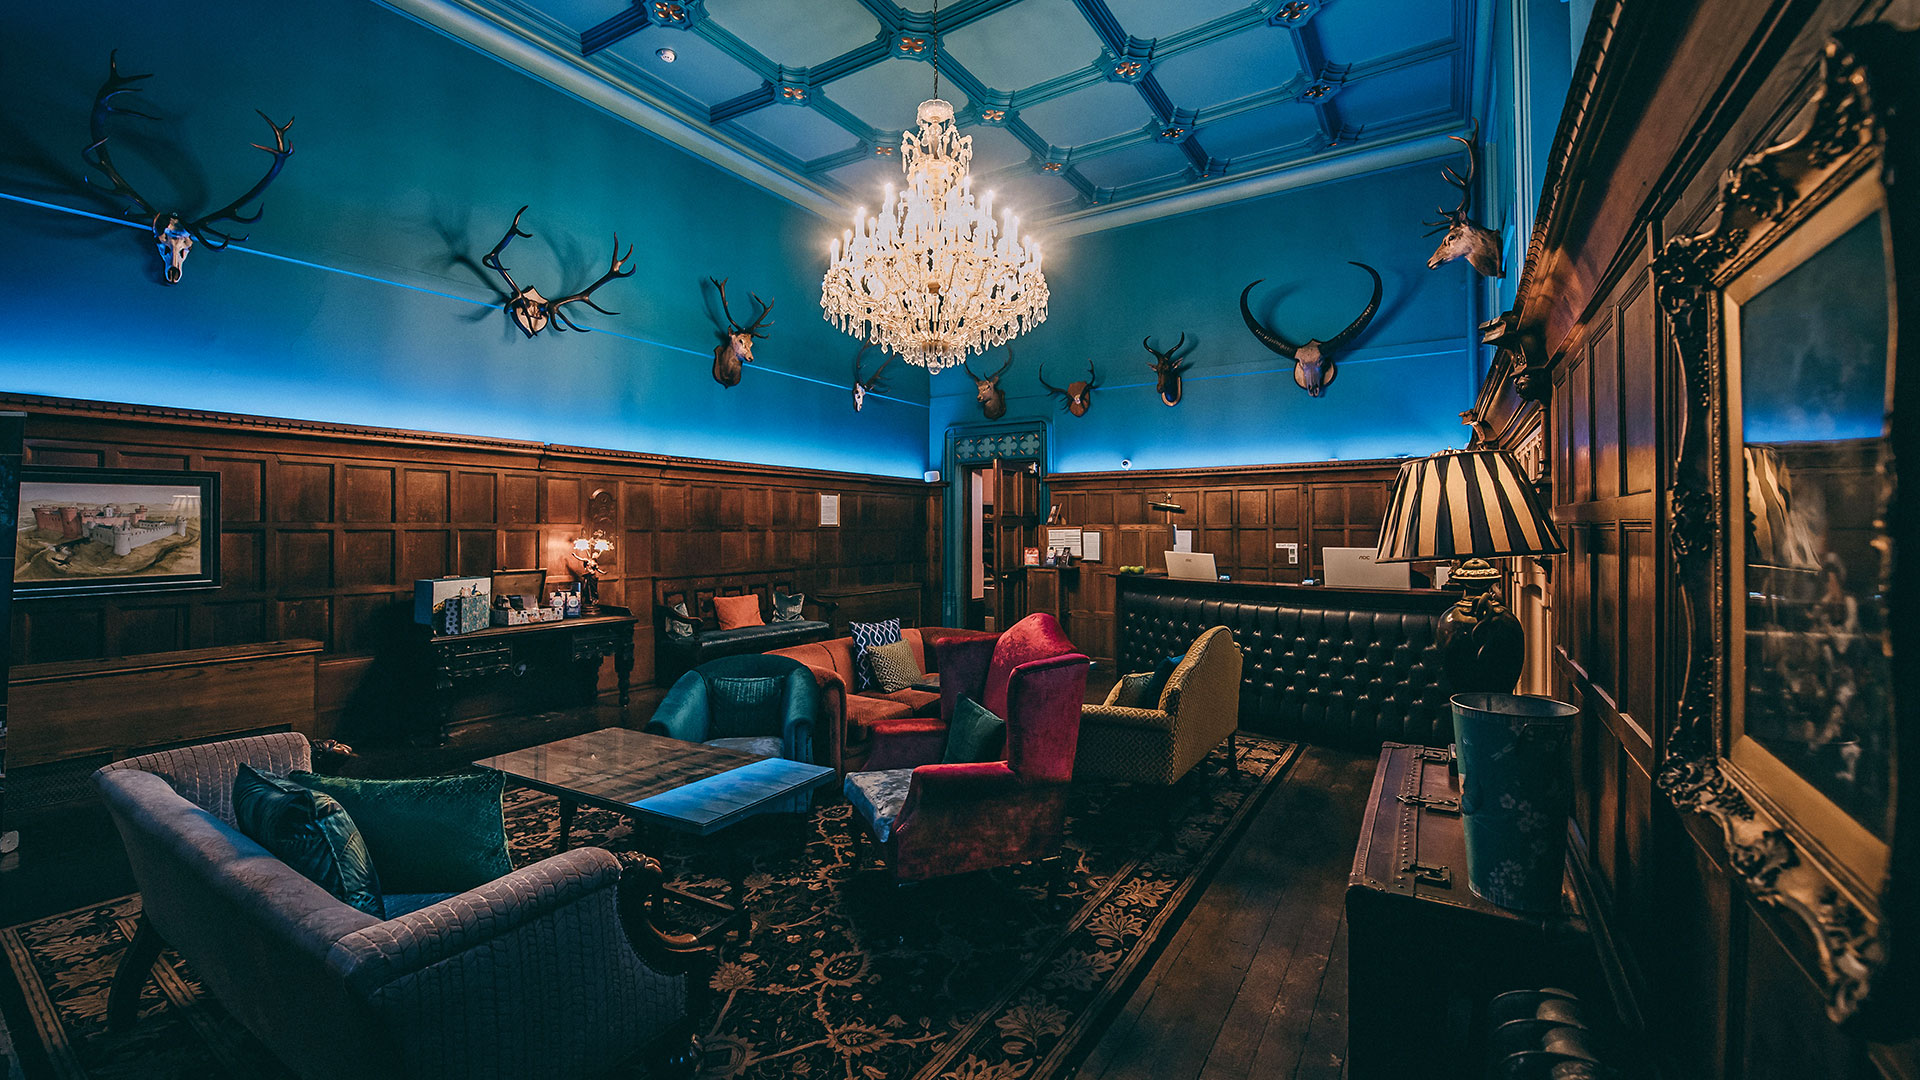 The Lounge - Ruthin Castle Hotel, Ruthin